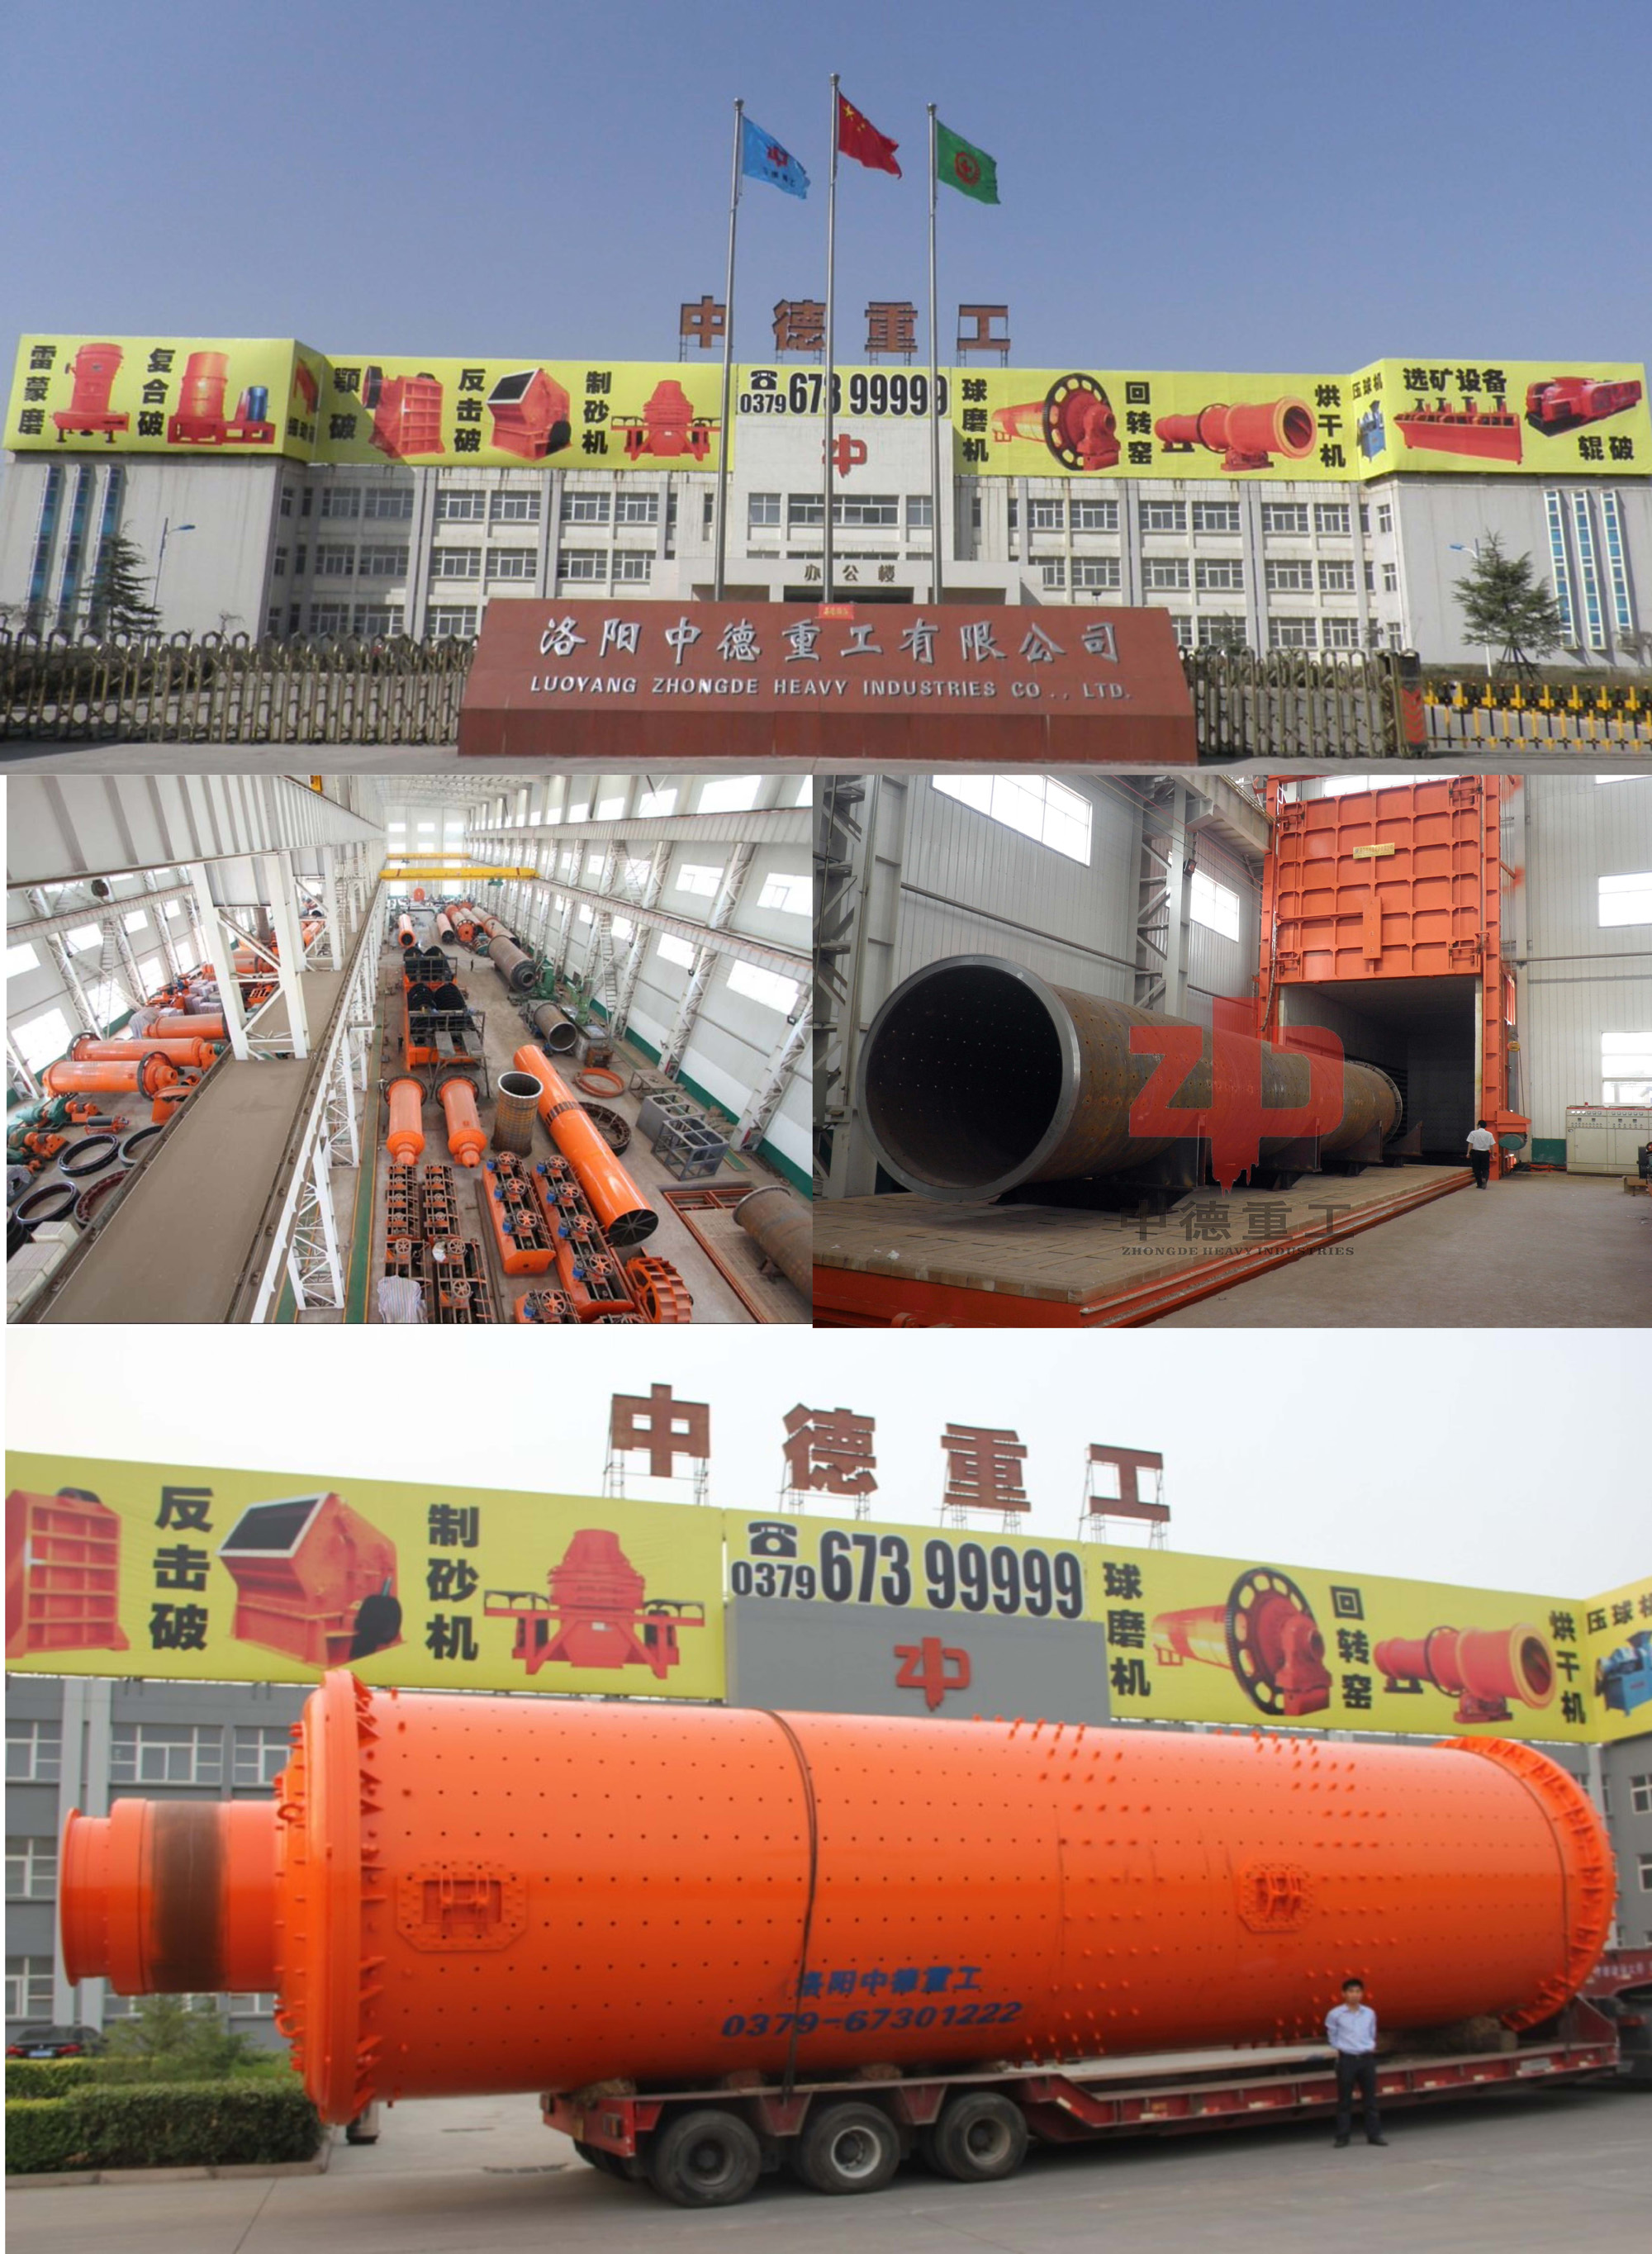 Luoyang Zhongde Heavy Industries Co., Ltd Main Image